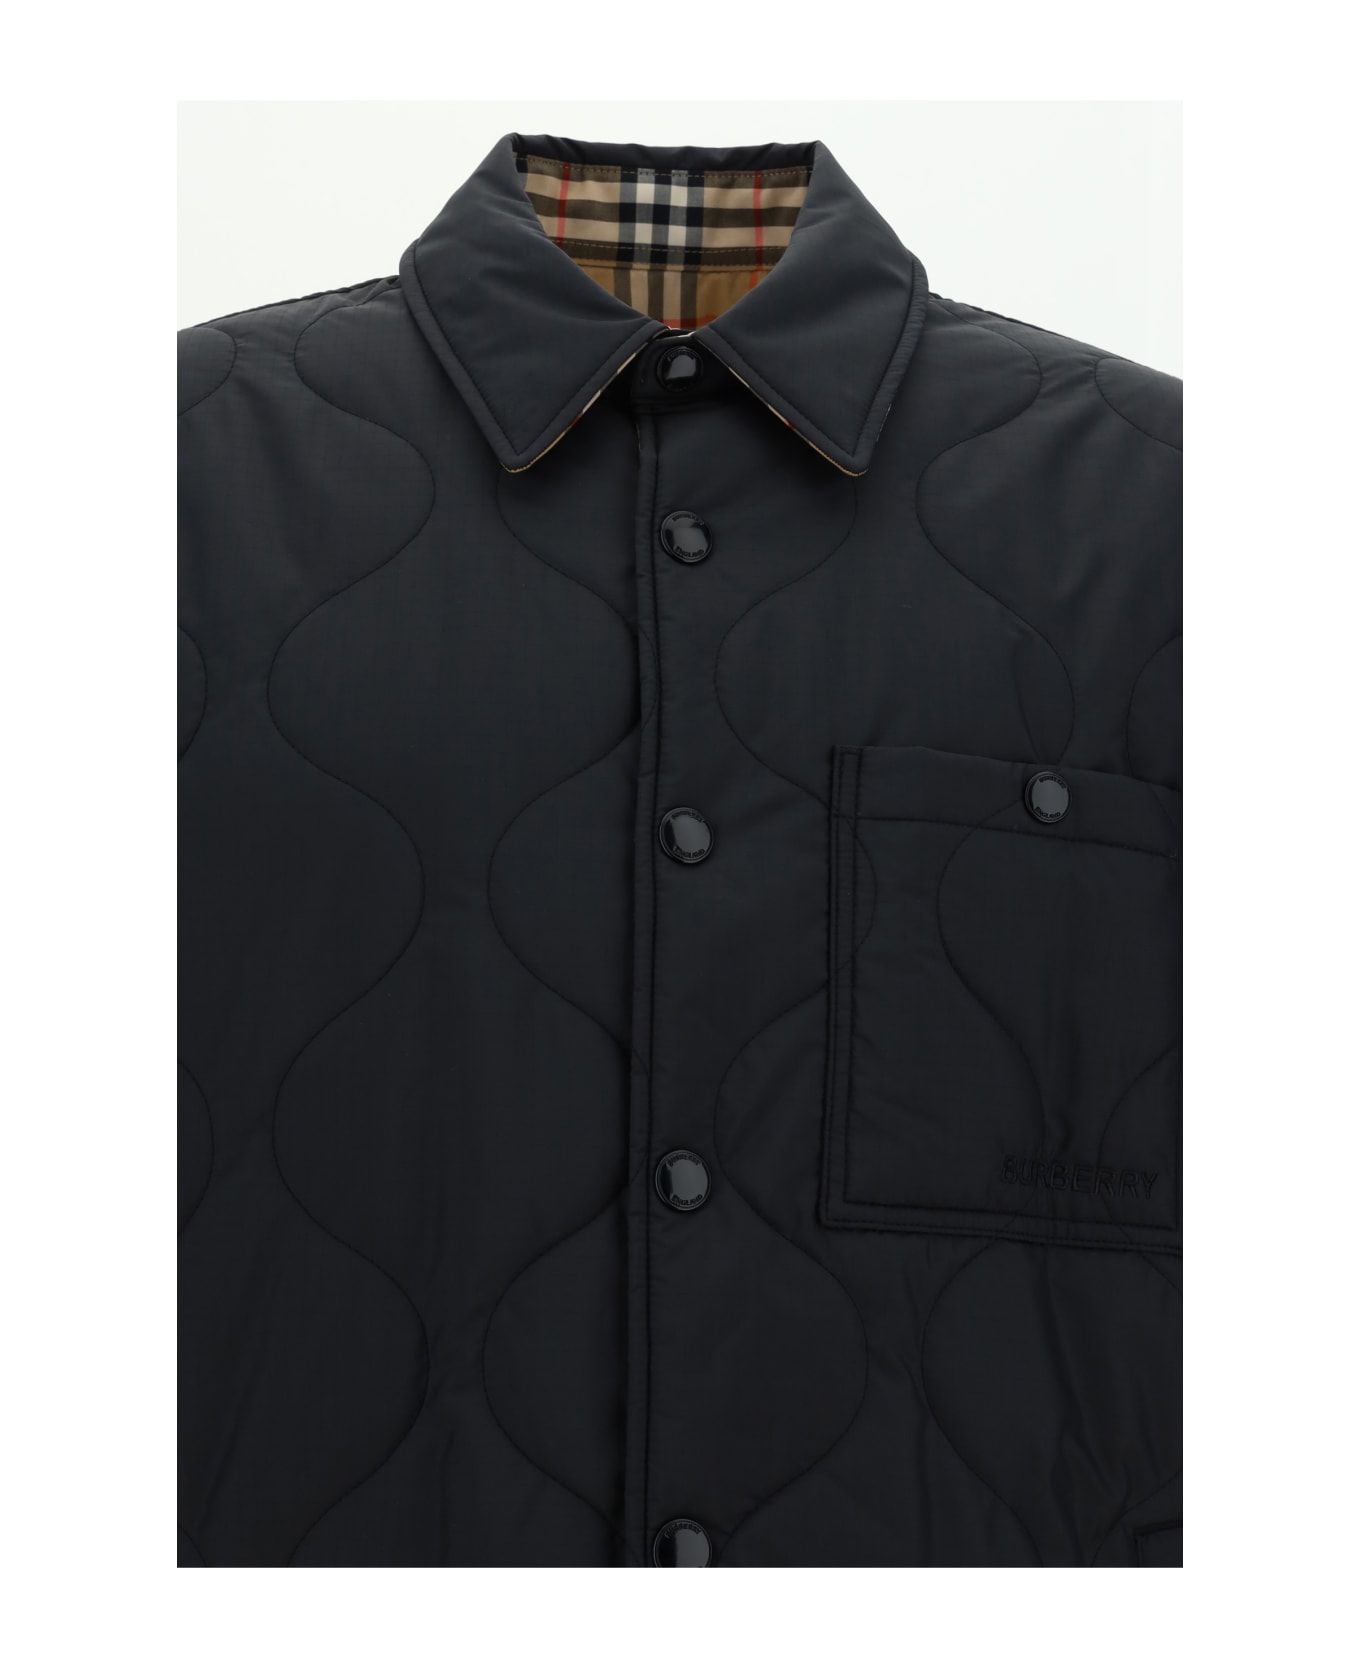 Burberry Reversible Jacket - Black ジャケット